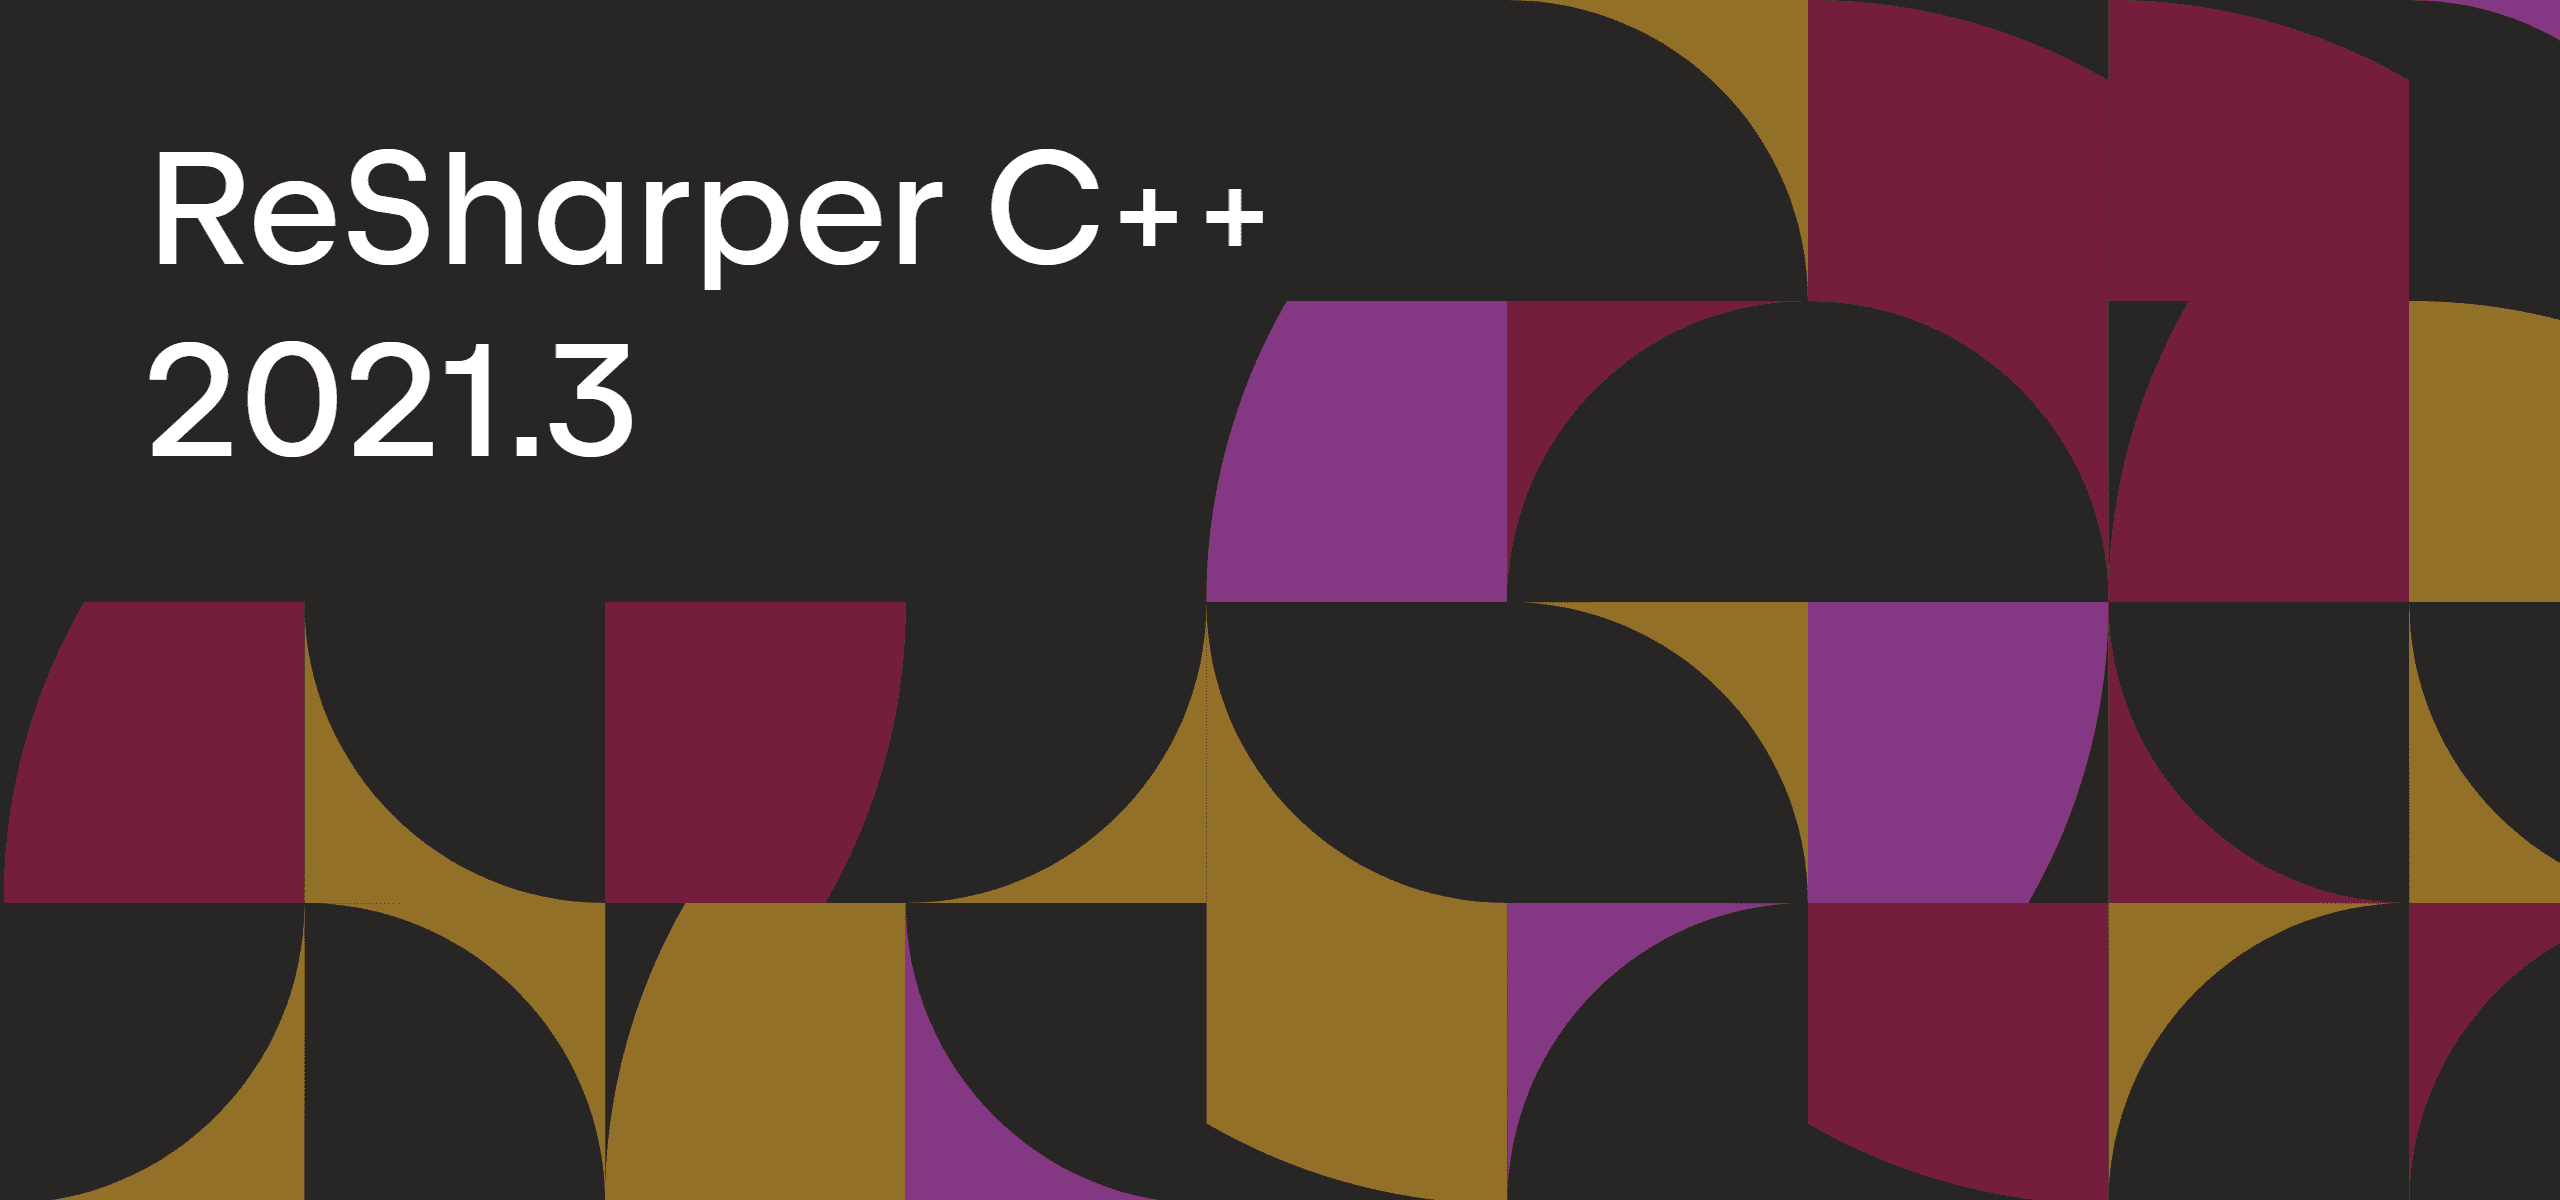 ReSharper C++ 2021.3